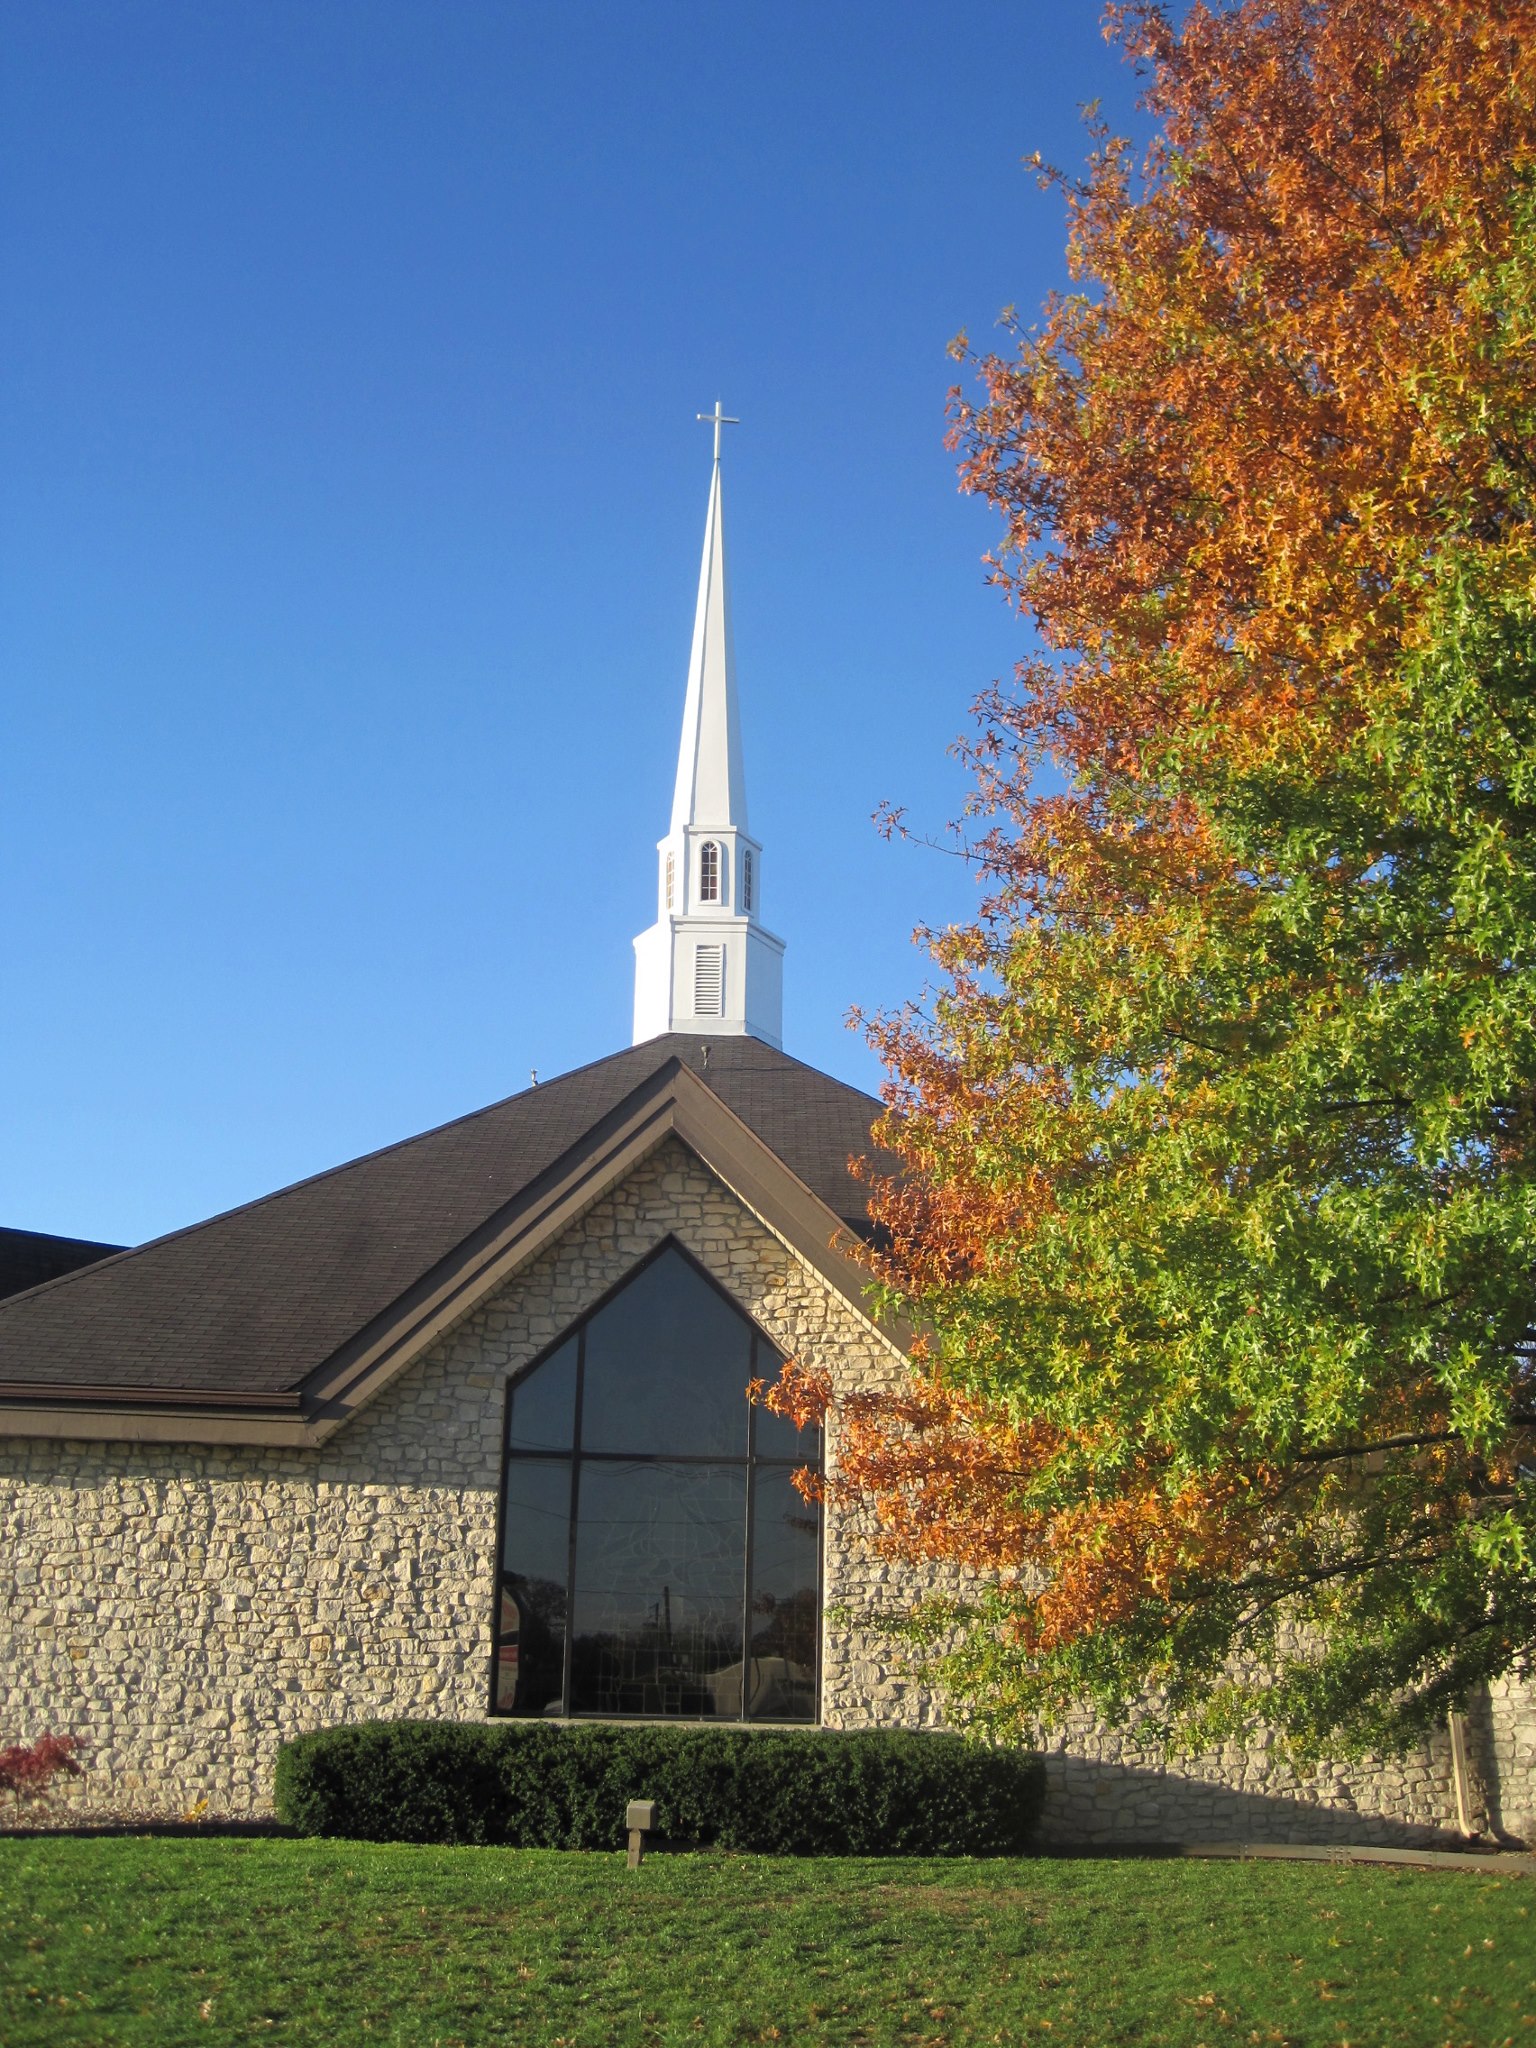 Christ United Methodist Church 